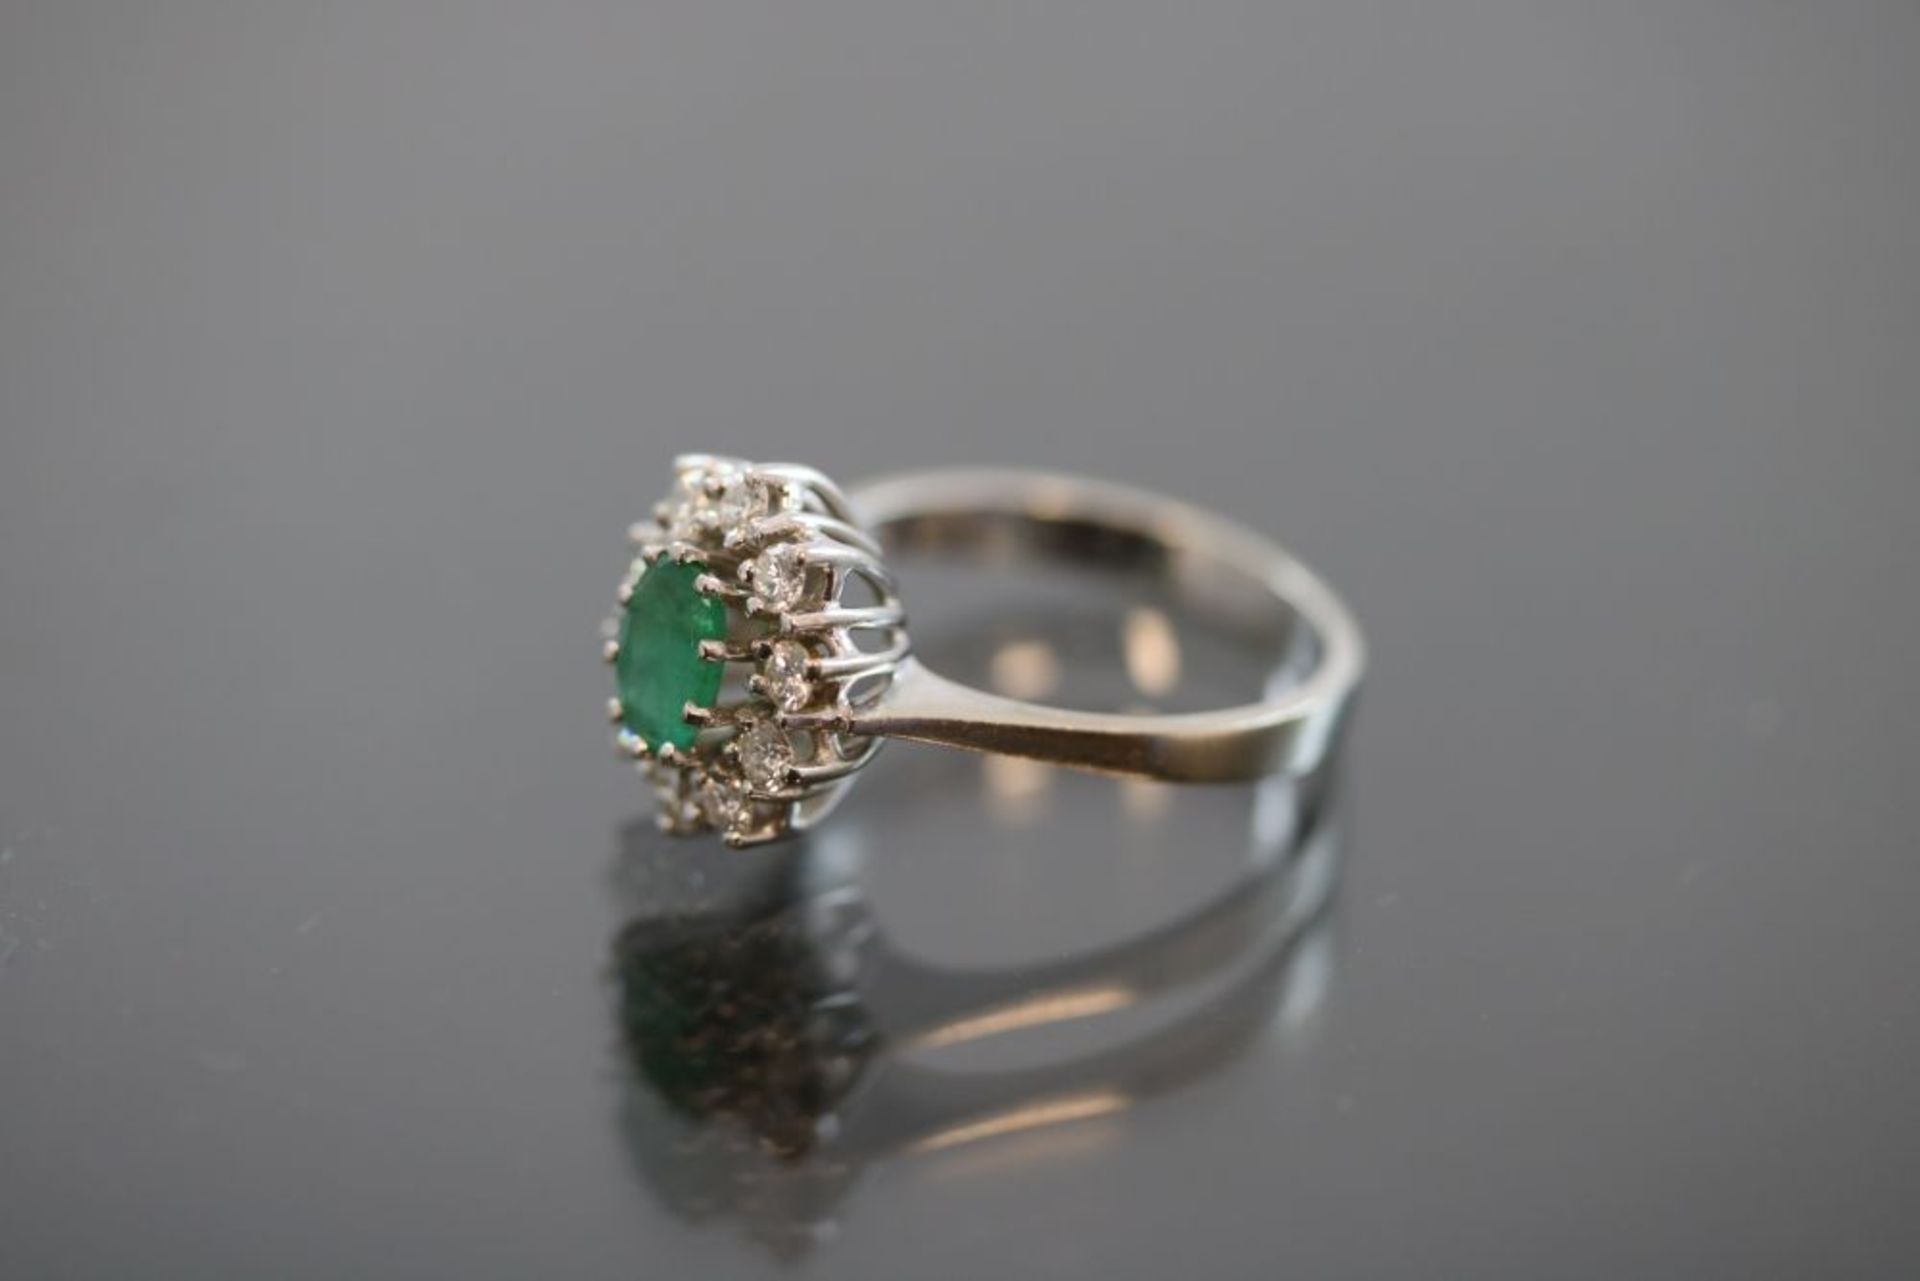 Smaragd-Brillant-Ring, 585 Weißgold - Image 2 of 3